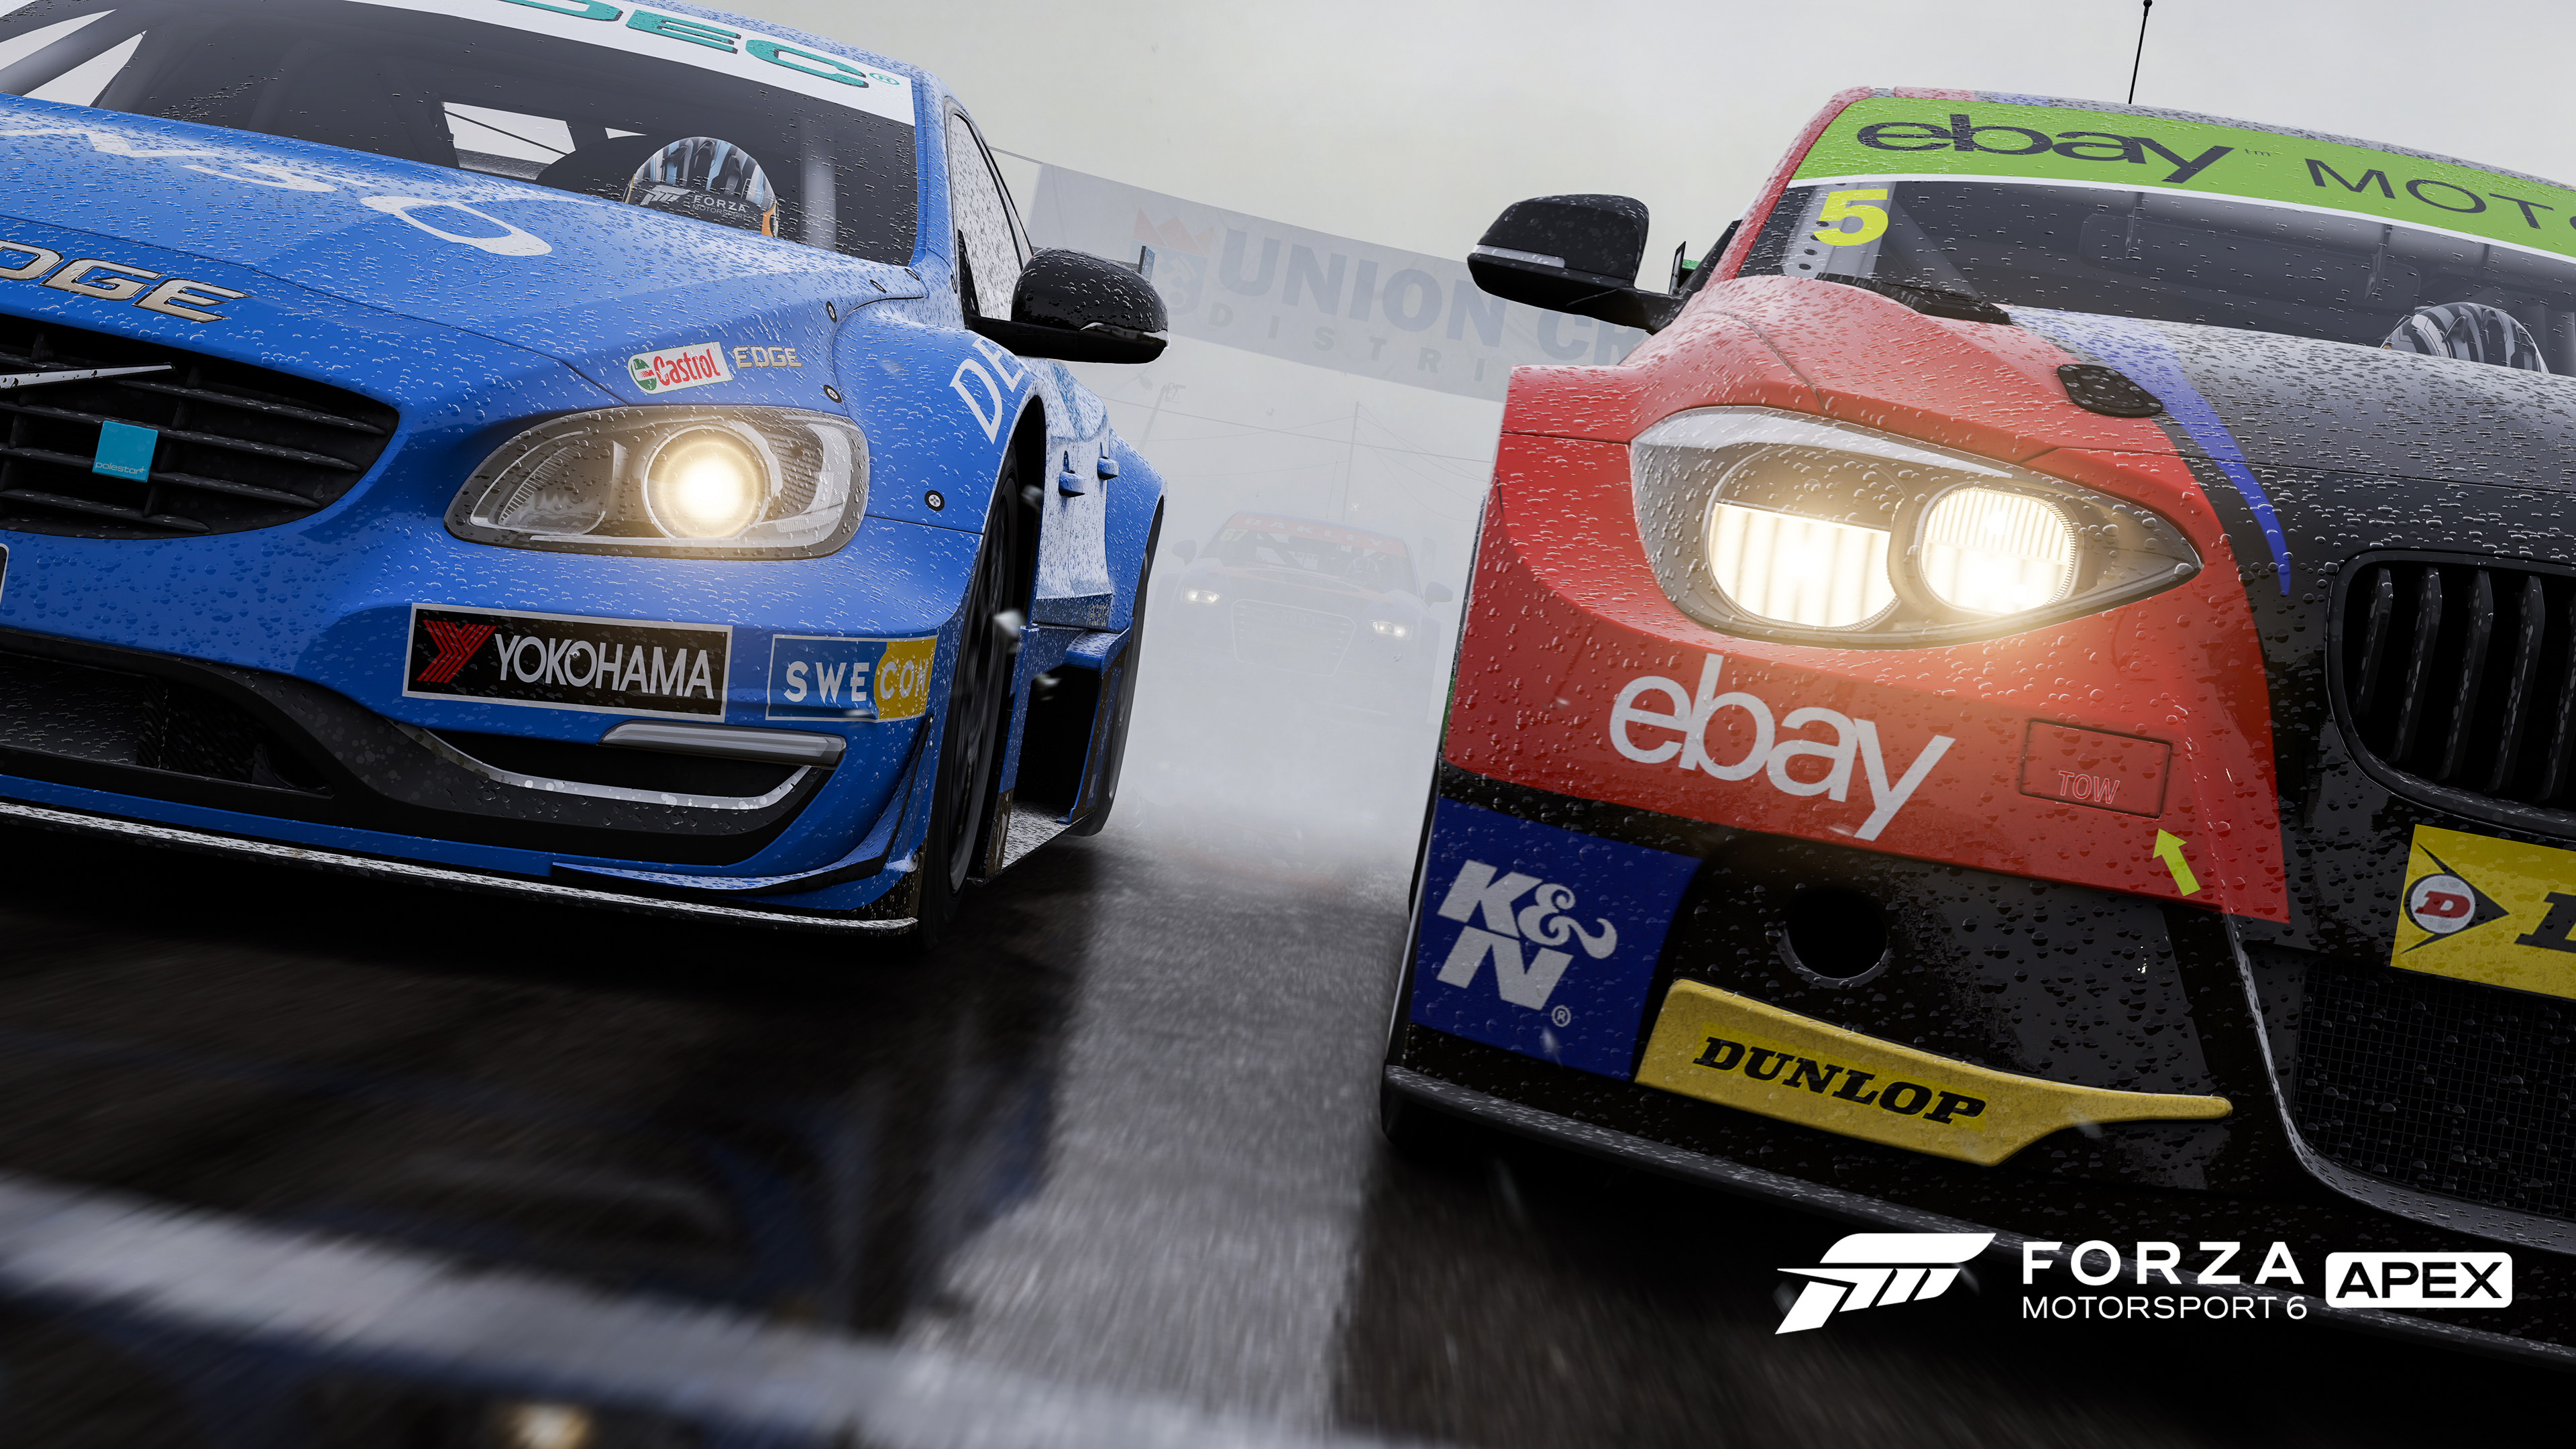 Racing in the rain in Forza Motorsport 6: Apex